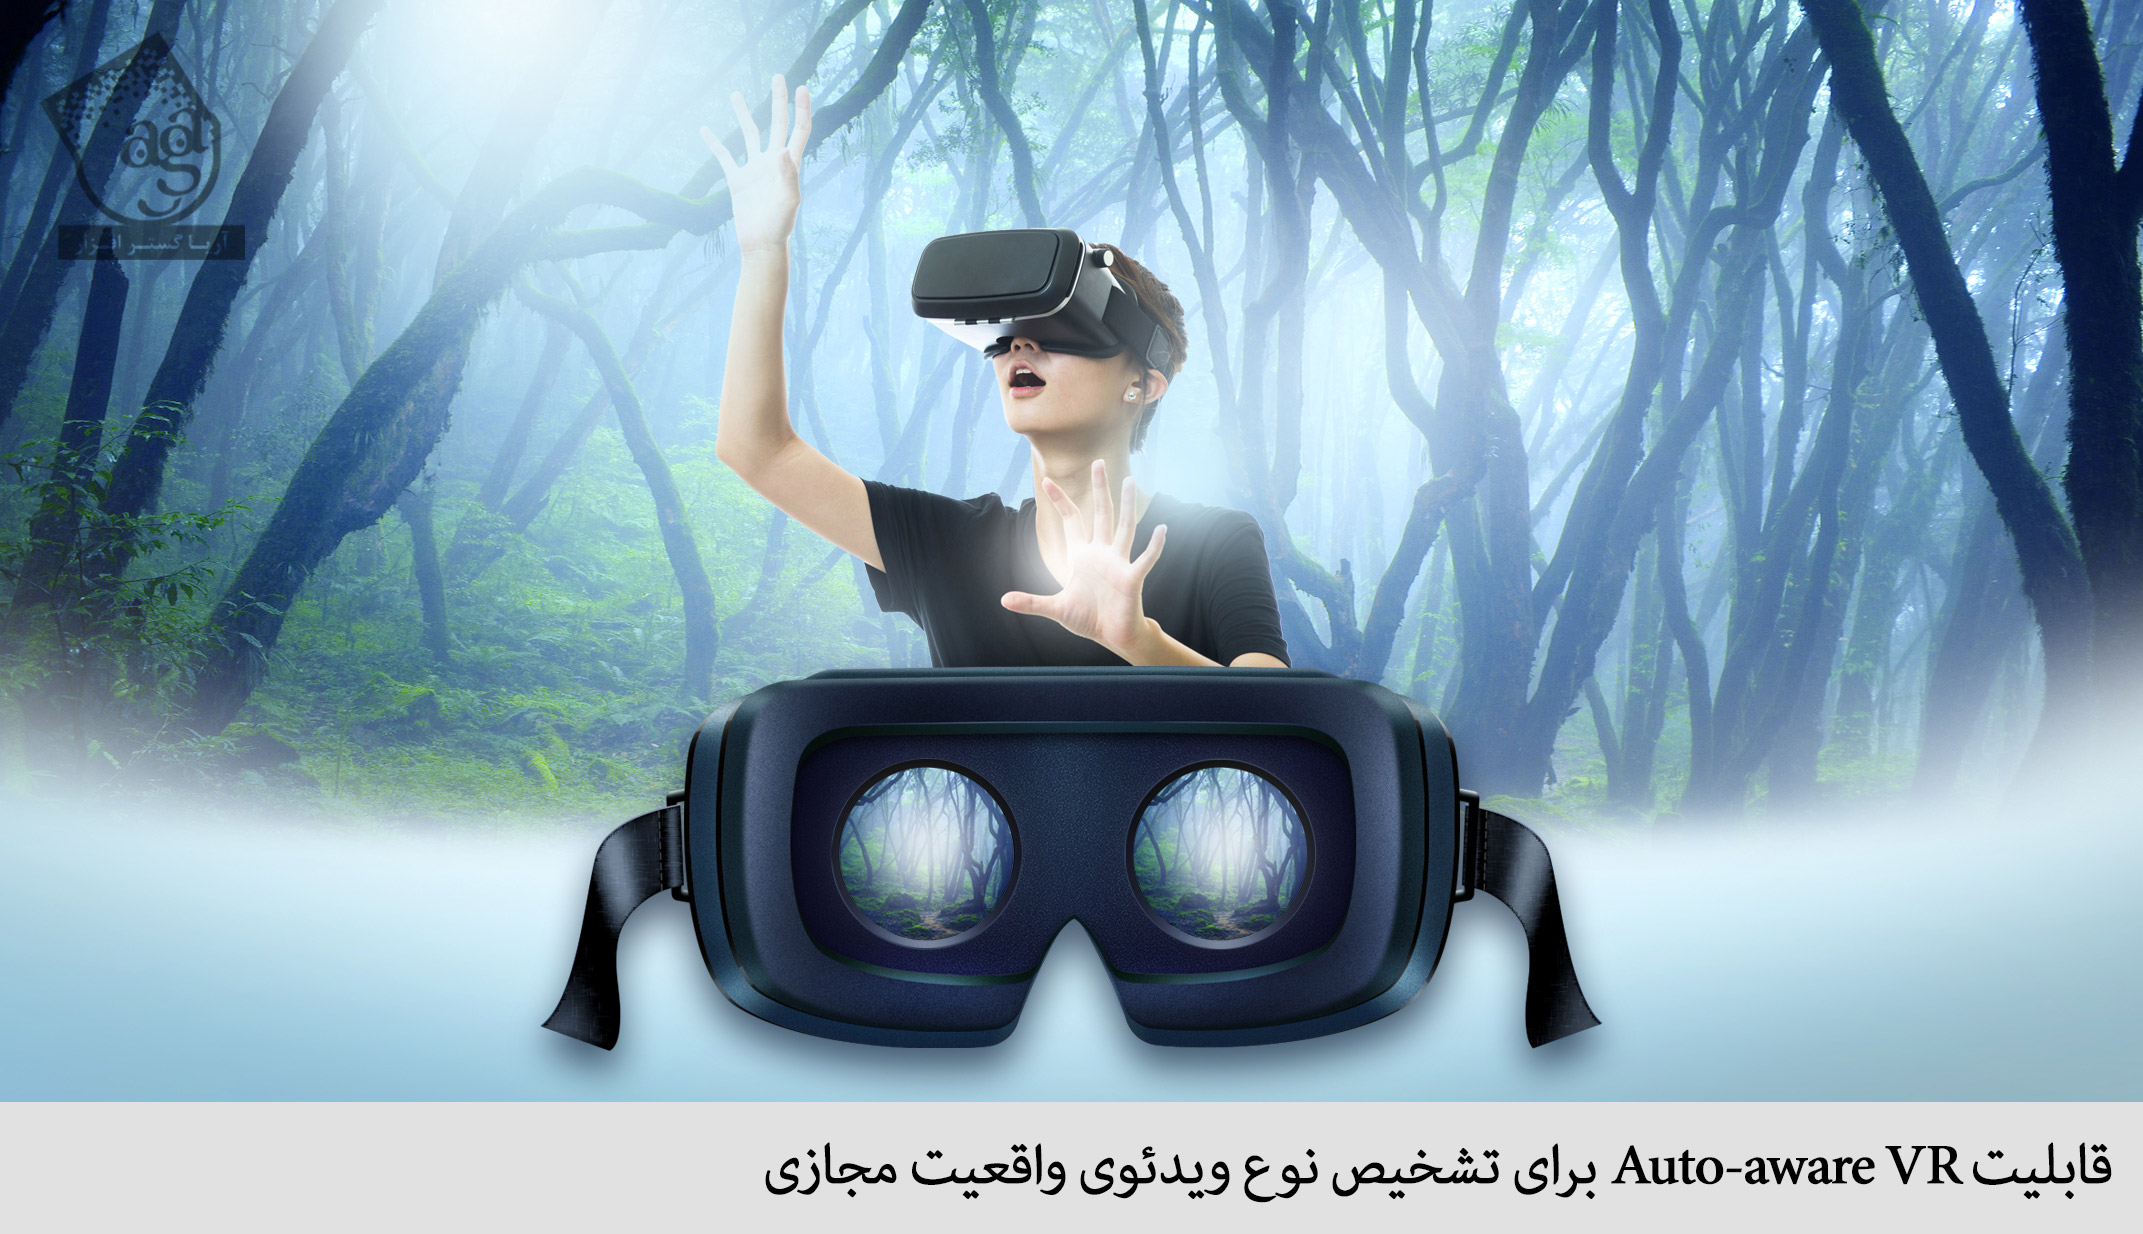 Vr пол. Виар очки вр360. Очки виртуальной реальности для детей. Очки виртуальной реальности на человеке. Вид в очках виртуальной реальности.